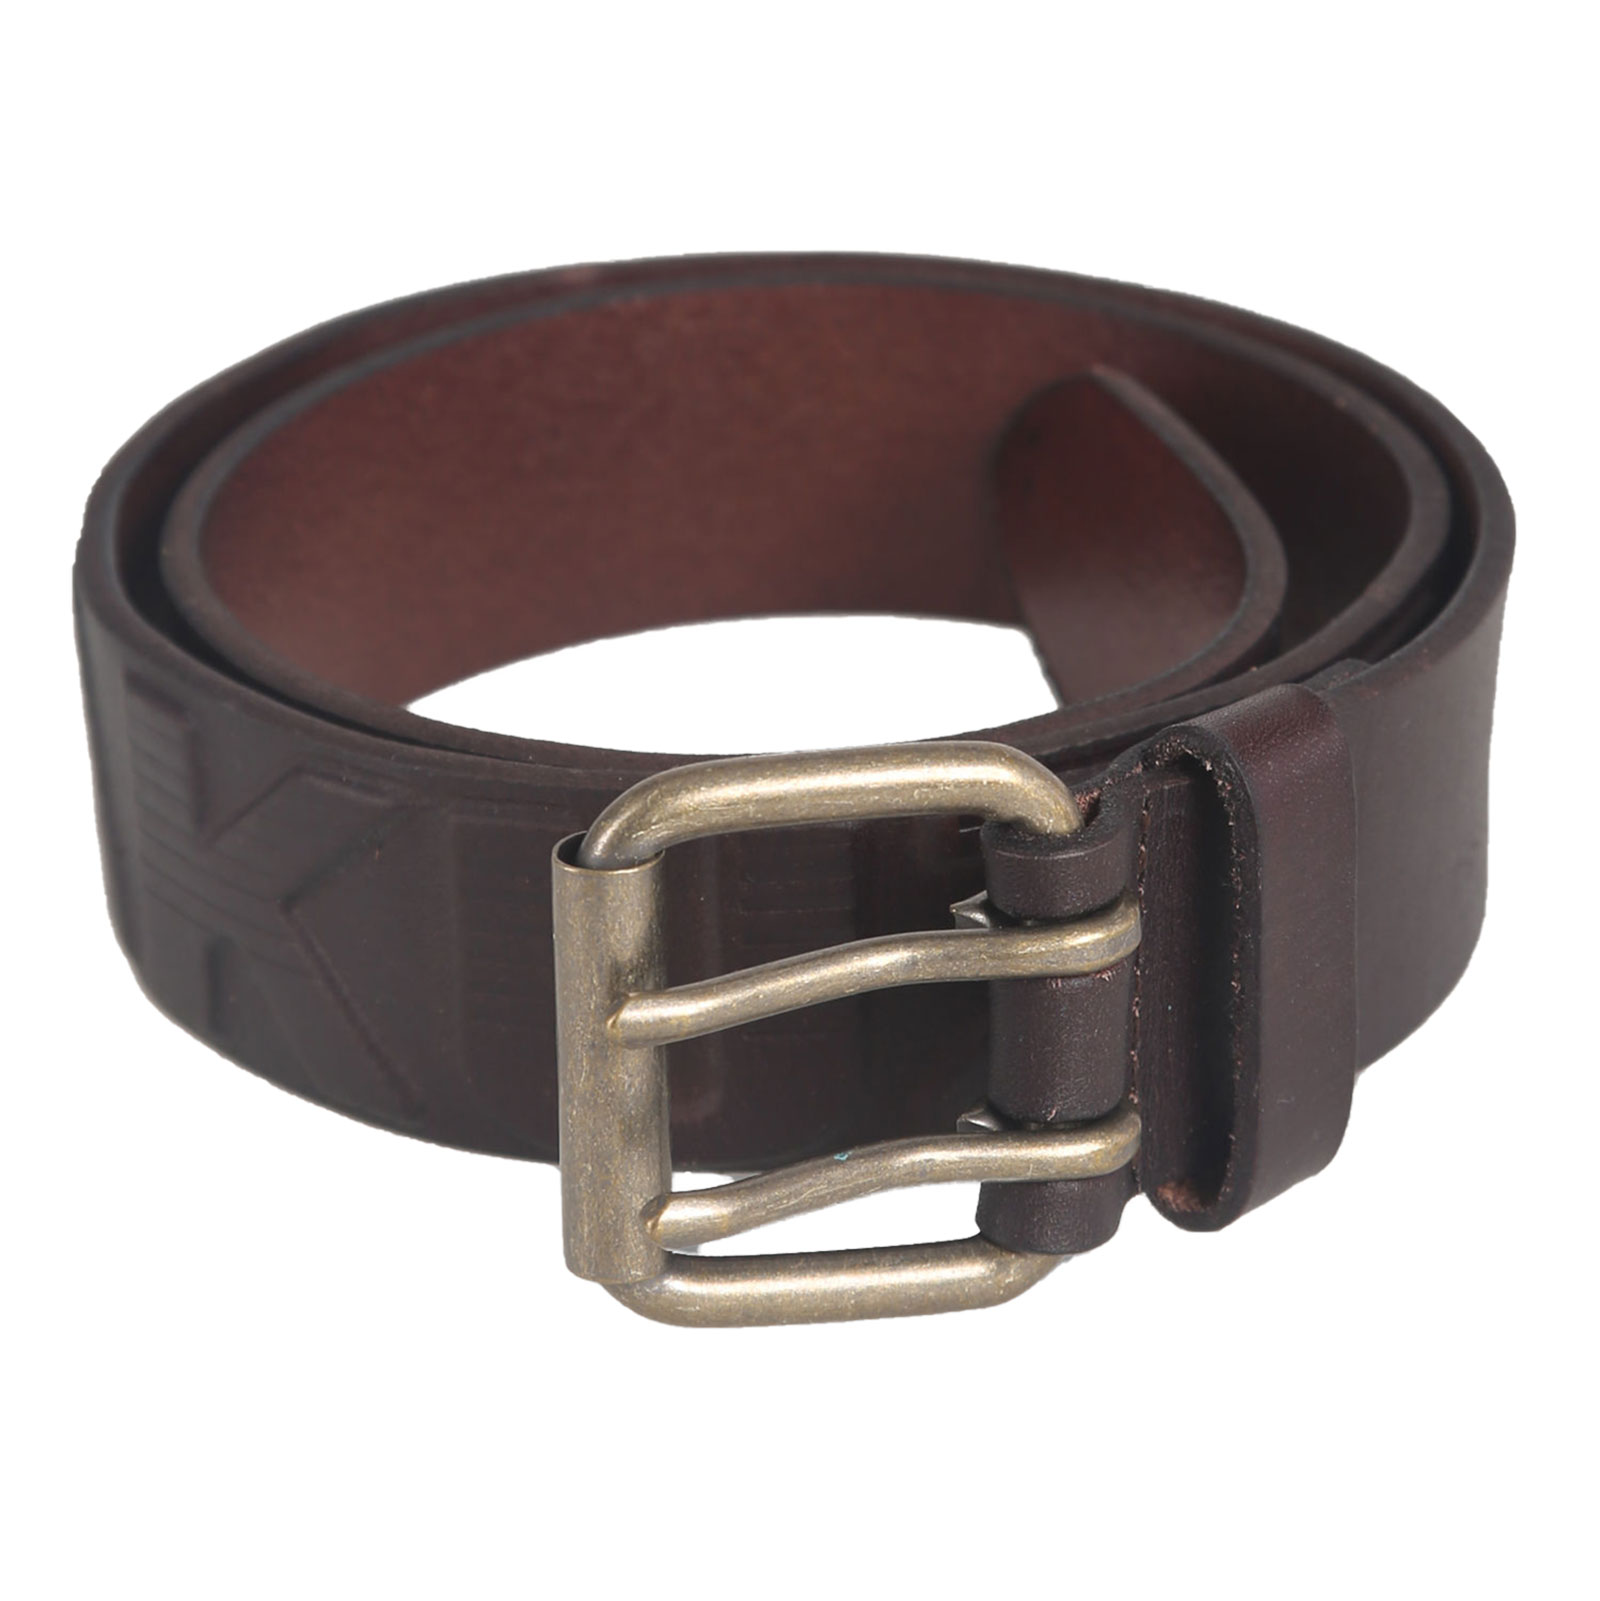 Yakuza Profile leather belt GB-15307 with metal buckle